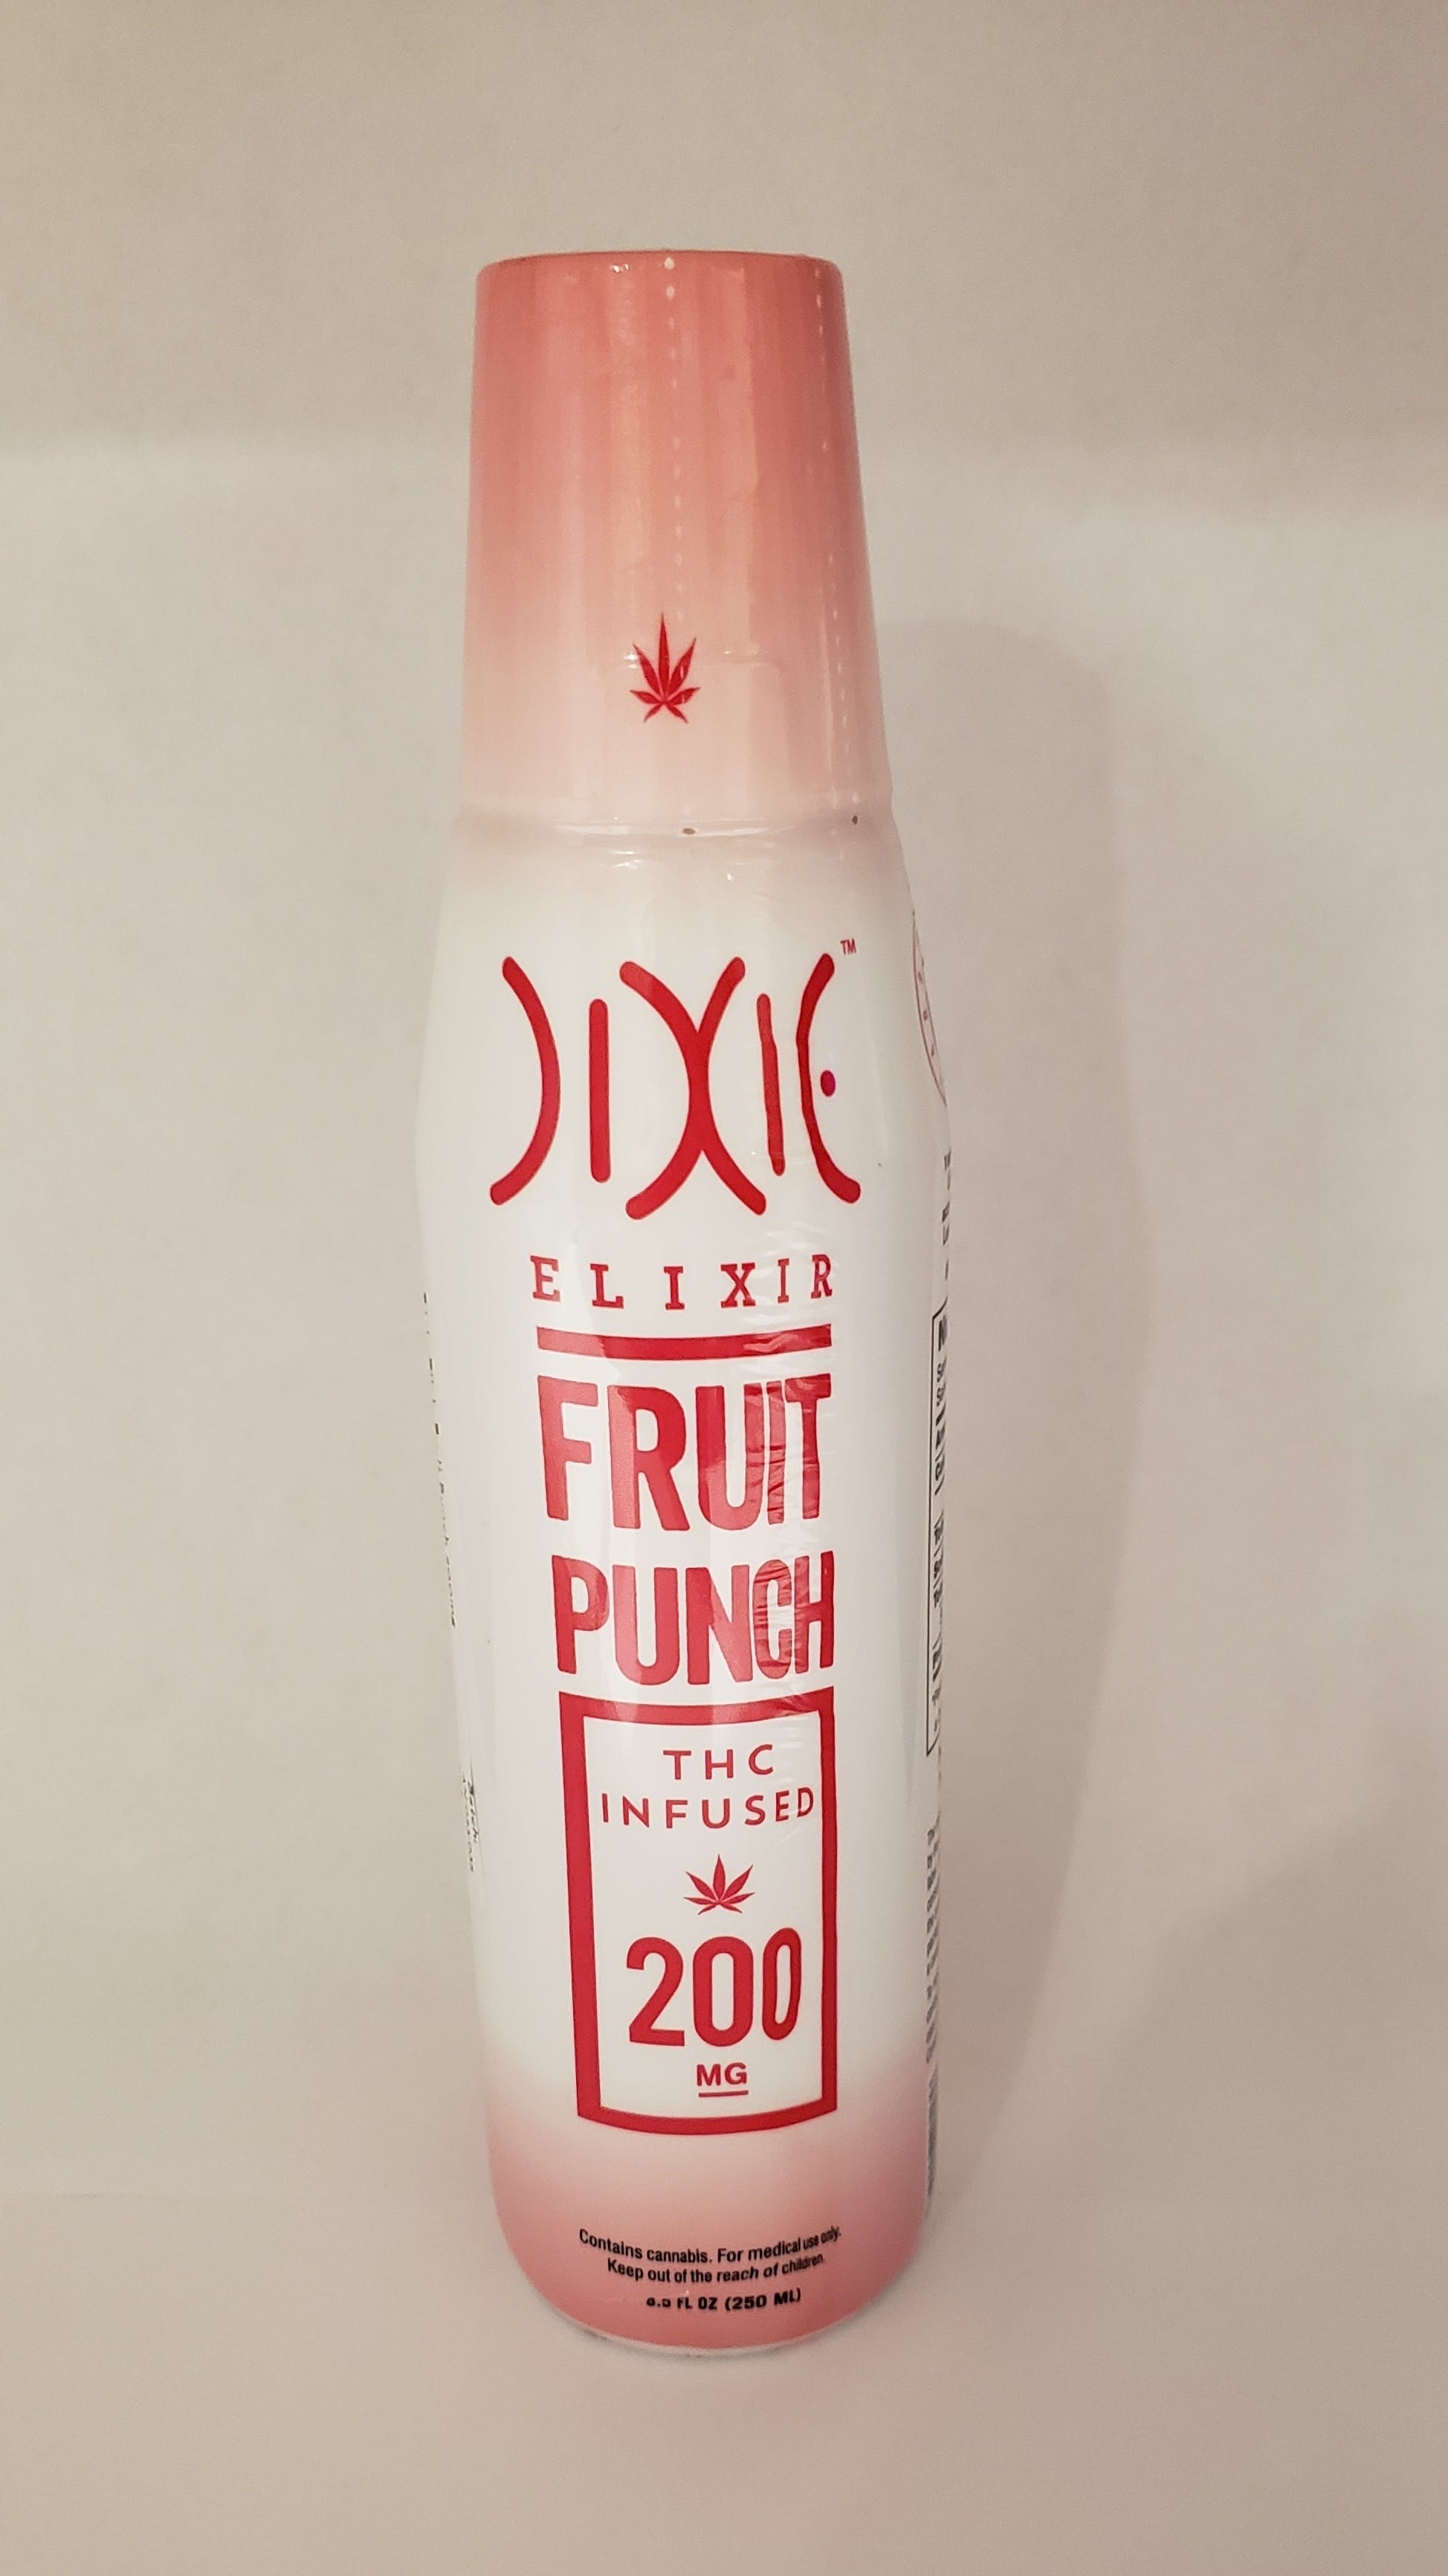 drink-dixie-fruit-punch-200mg-elixir